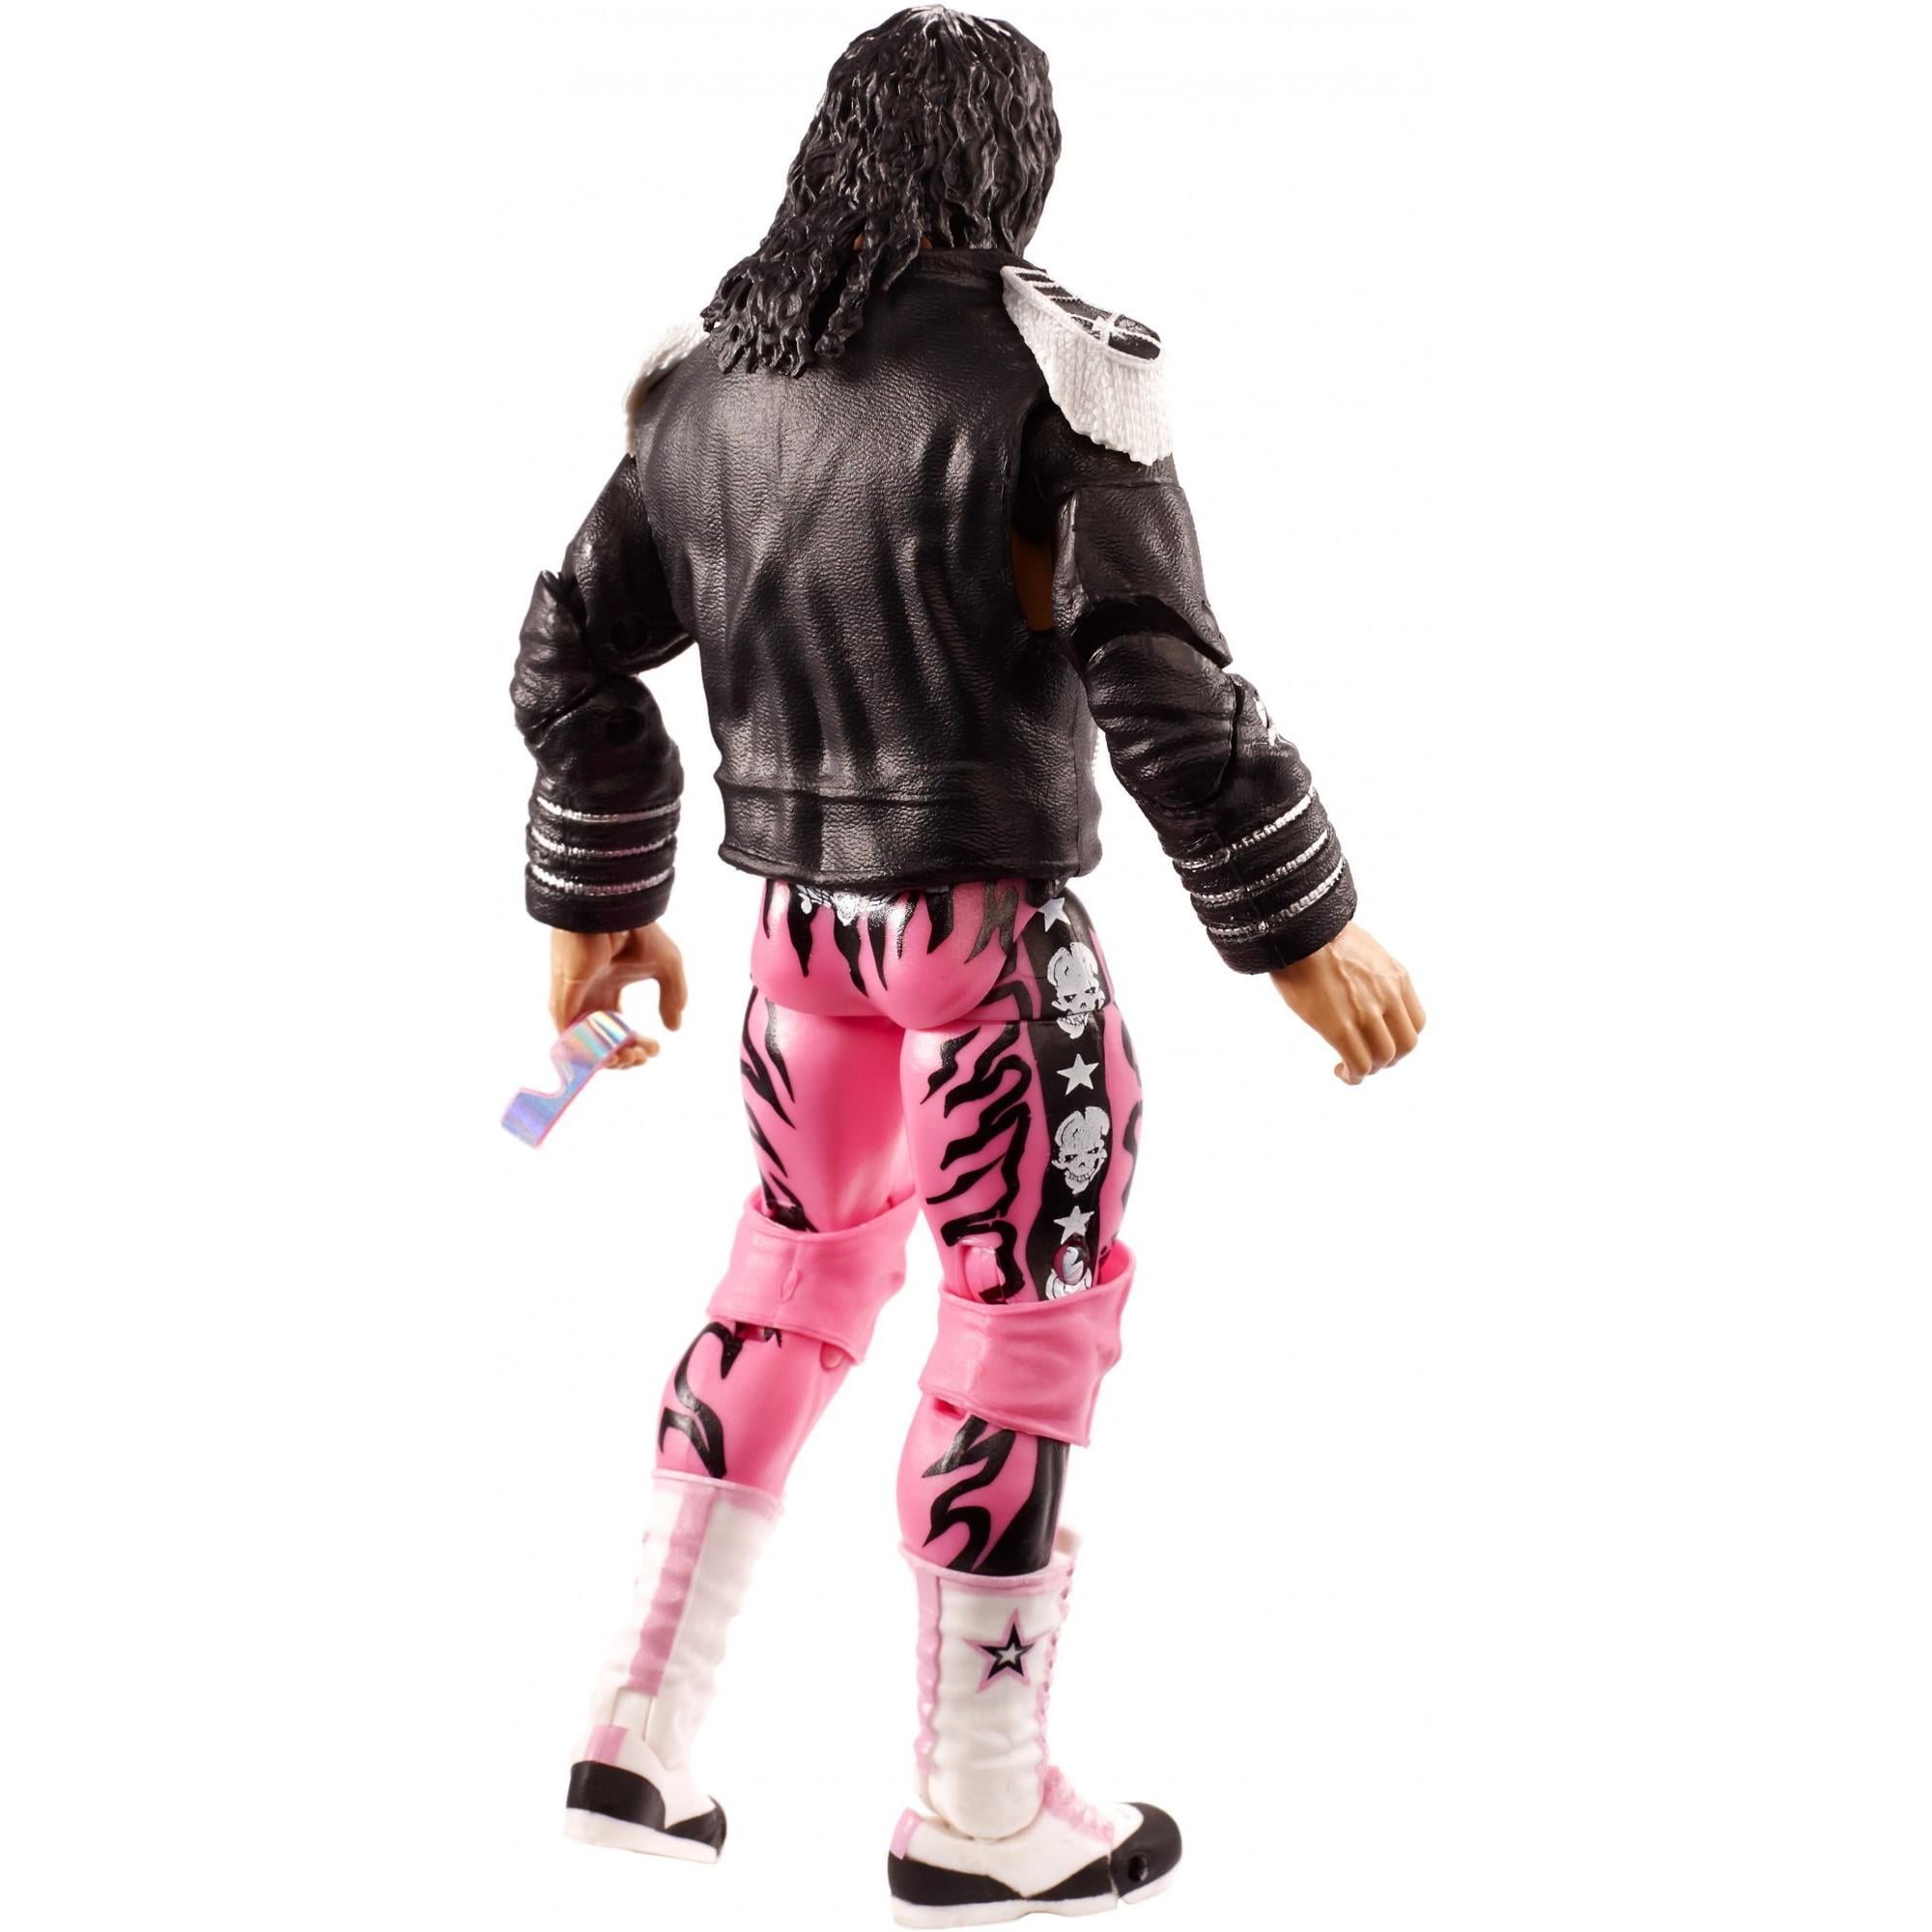 WWE Mattel Bret Hitman Hart 6 inch Action Figure GGN89 for sale online 